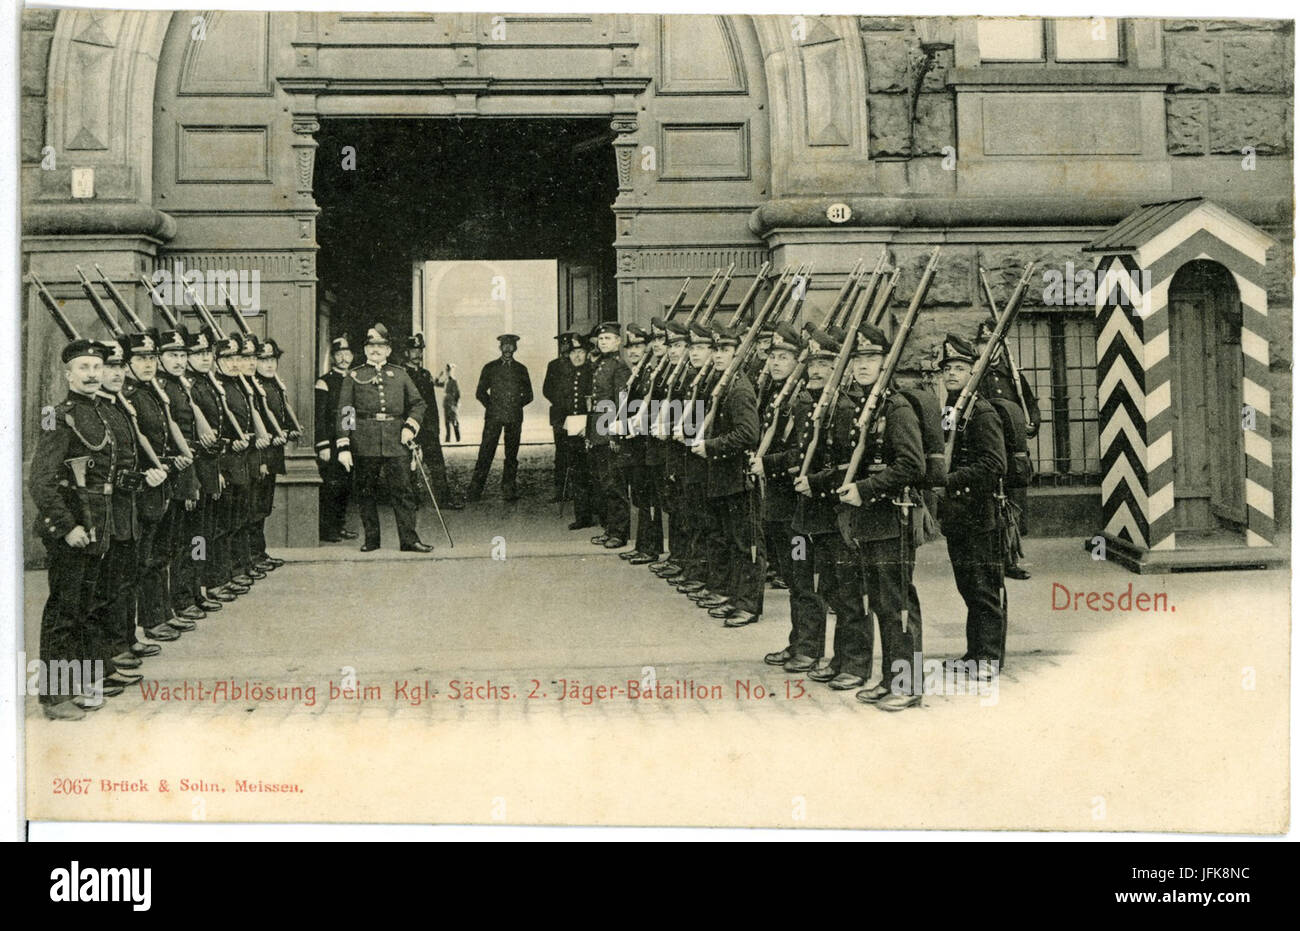 02067-Dresden-1901-Wacht-Ablösung 2. Jäger-Bataillon-Brück & Sohn Kunstverlag Stock Photo